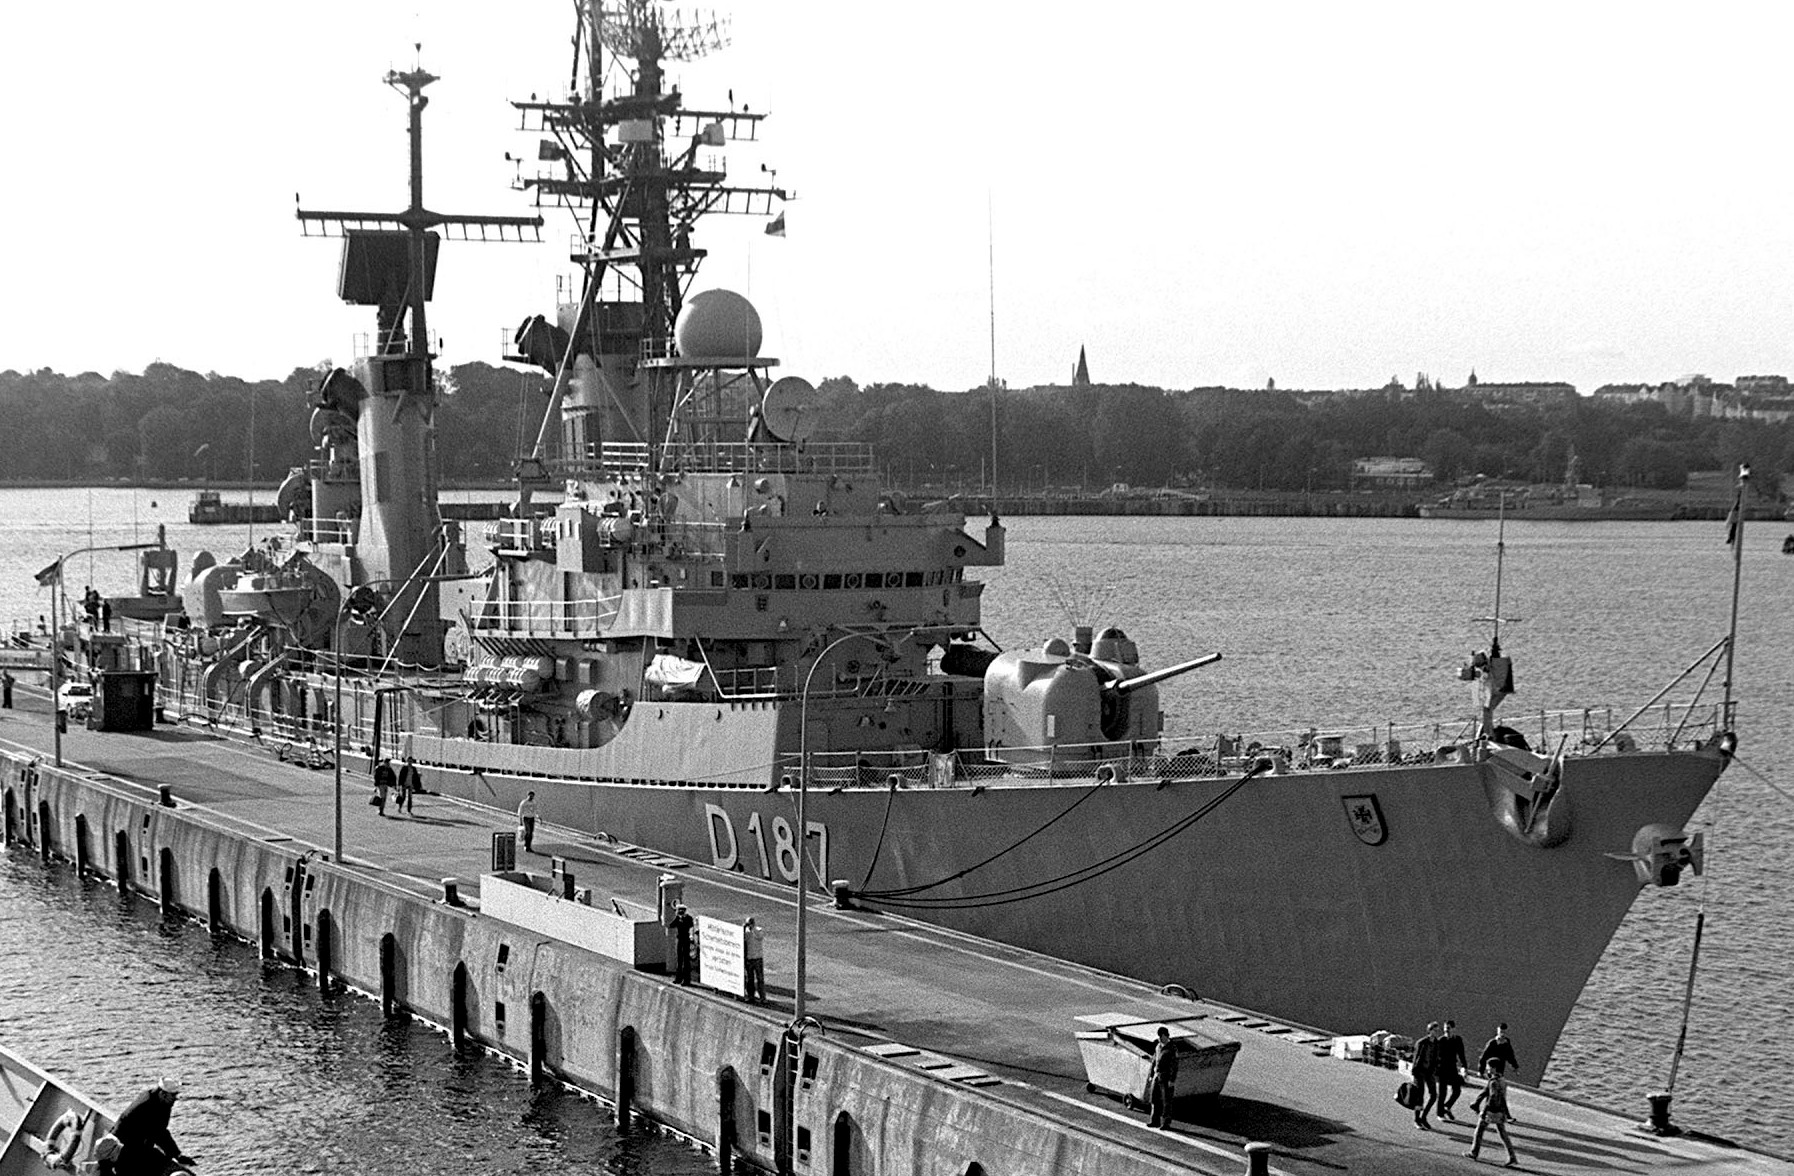 d-187 fgs rommel type 103 lütjens class guided missile destroyer german navy deutsche marine 05